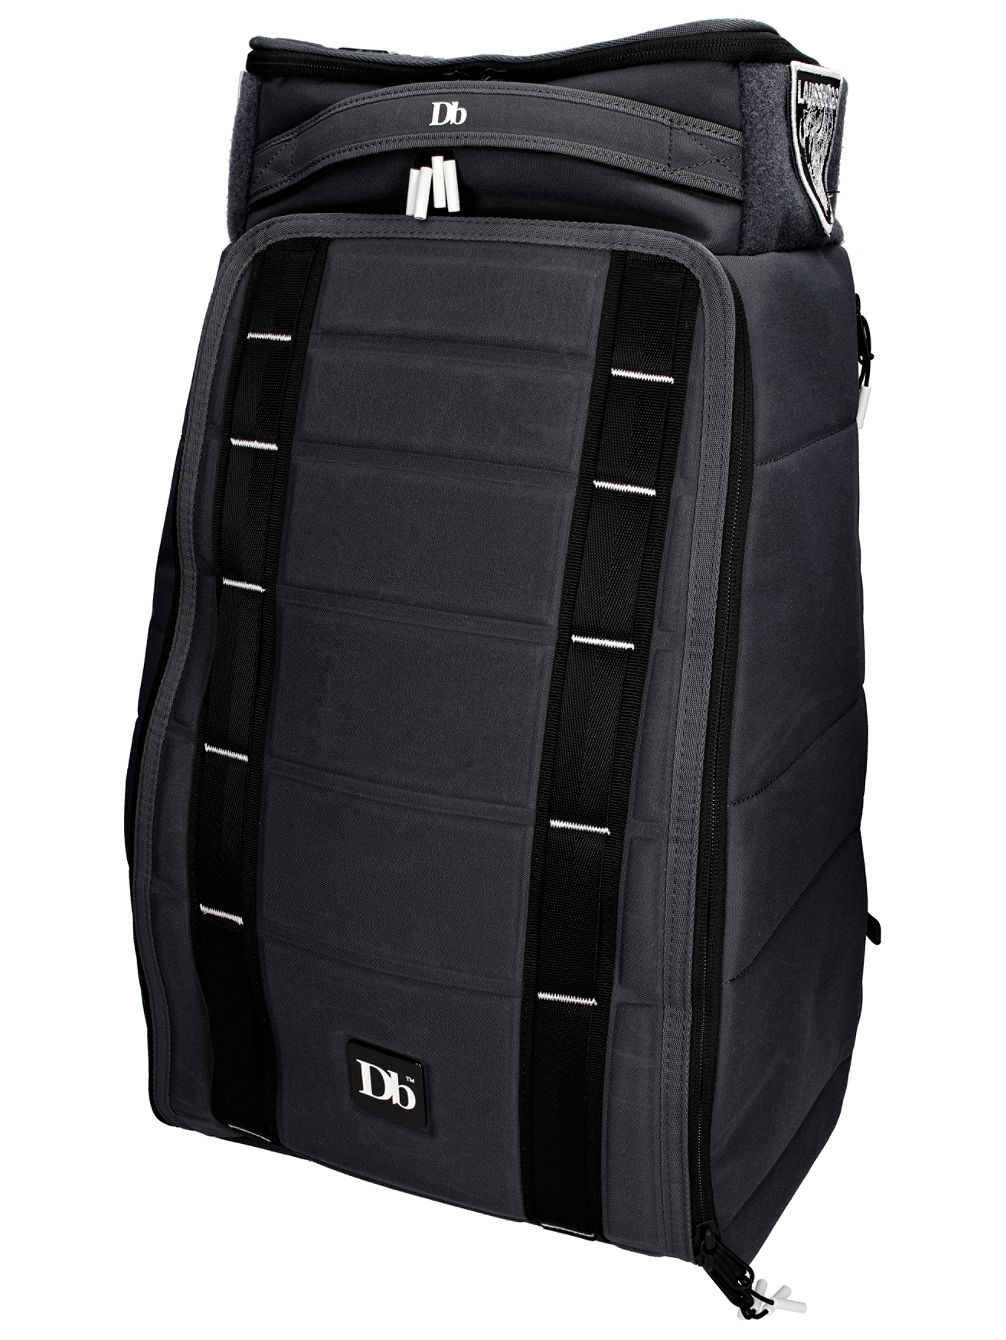 The Hugger 30L Backpack